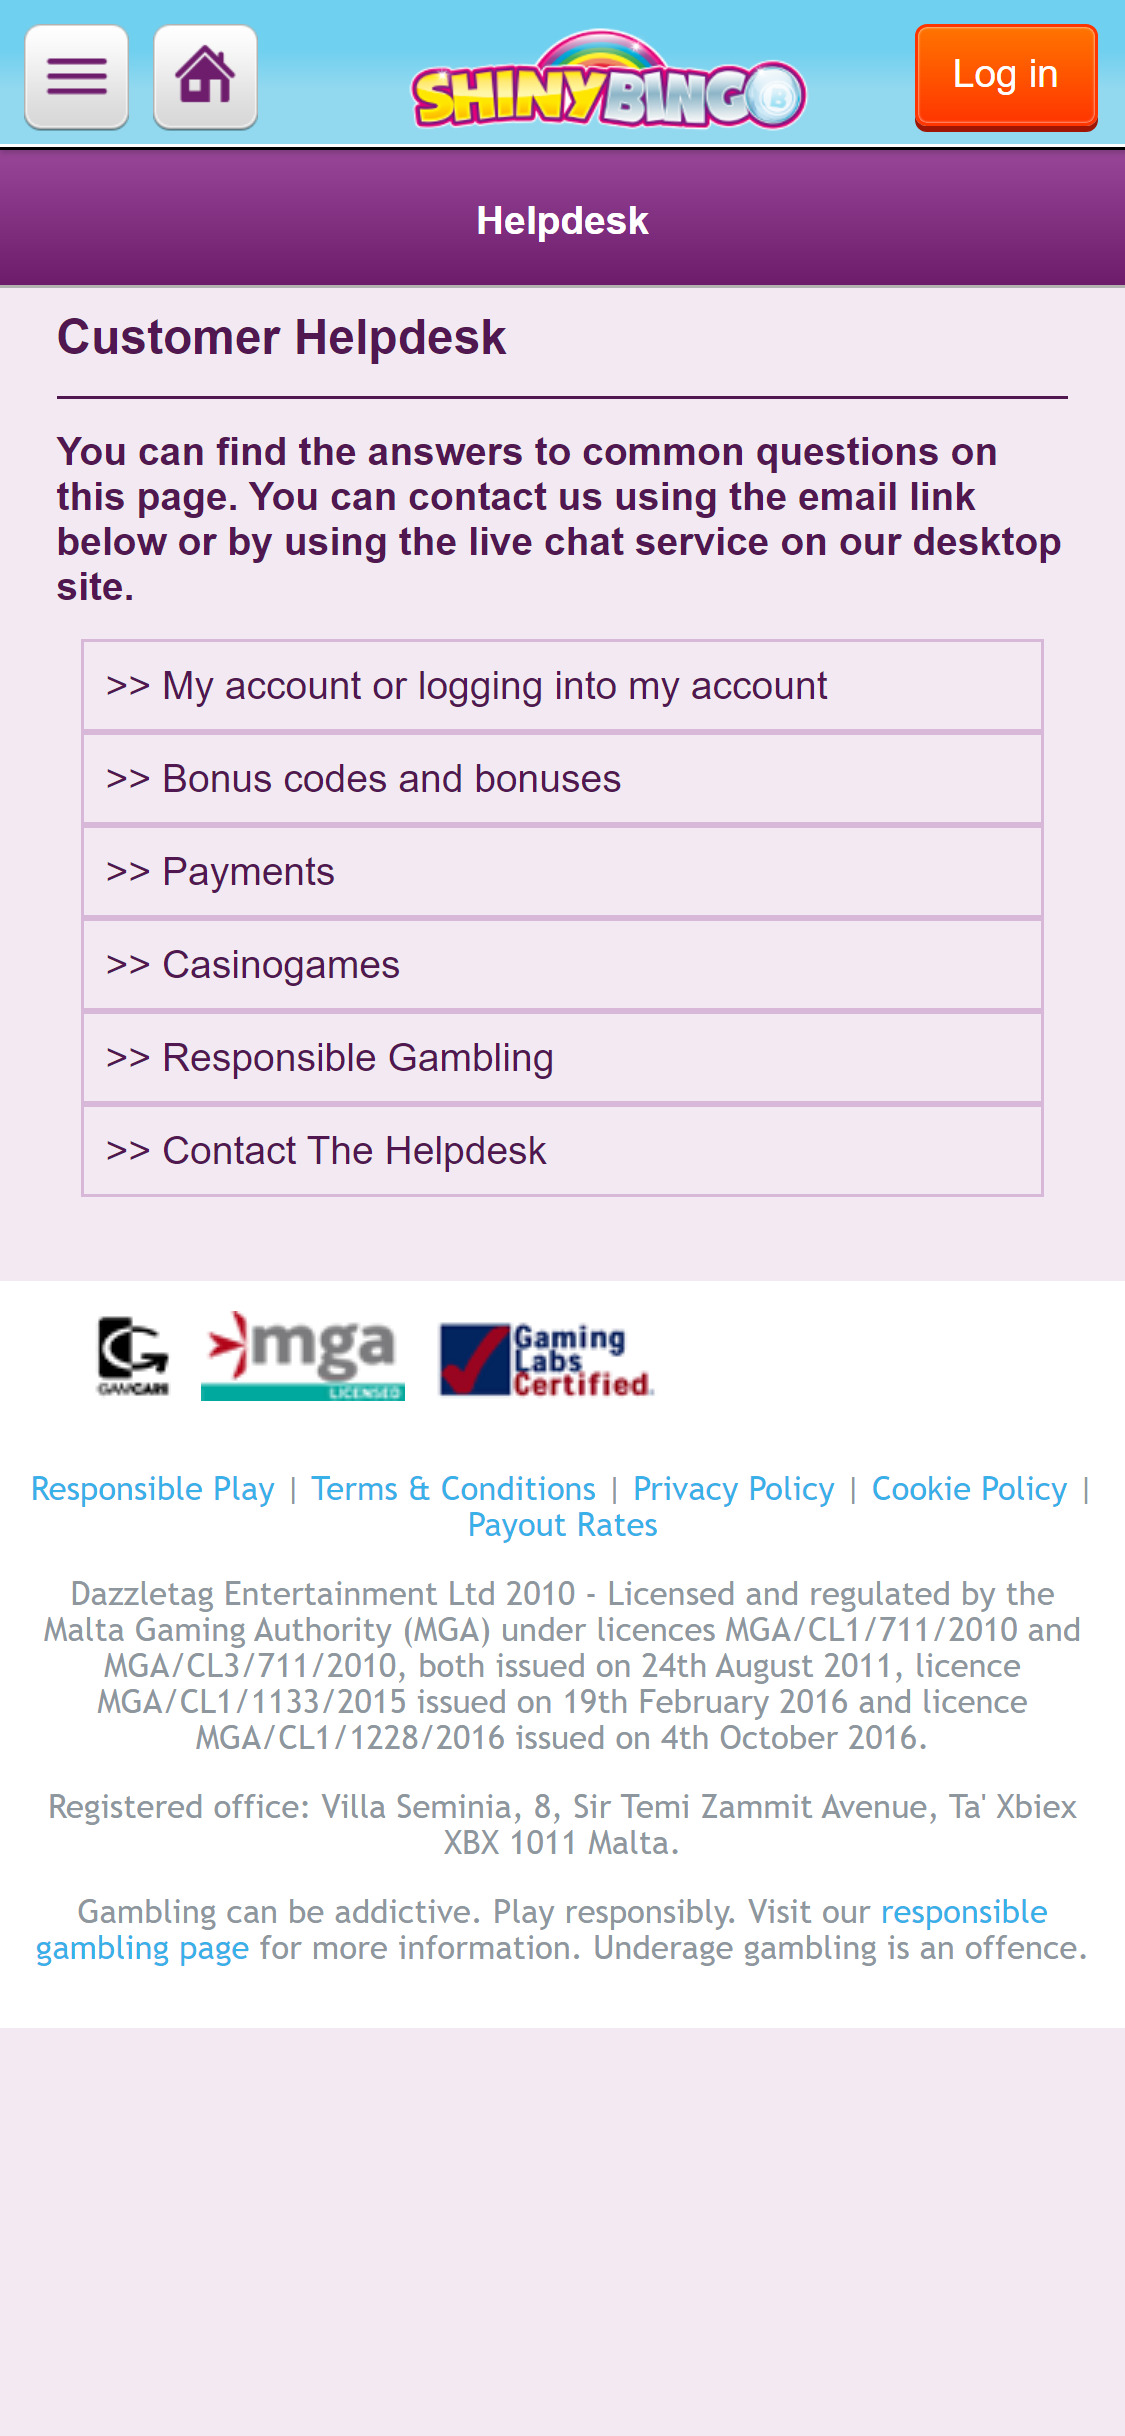 Shiny Bingo Casino Mobile Support Review